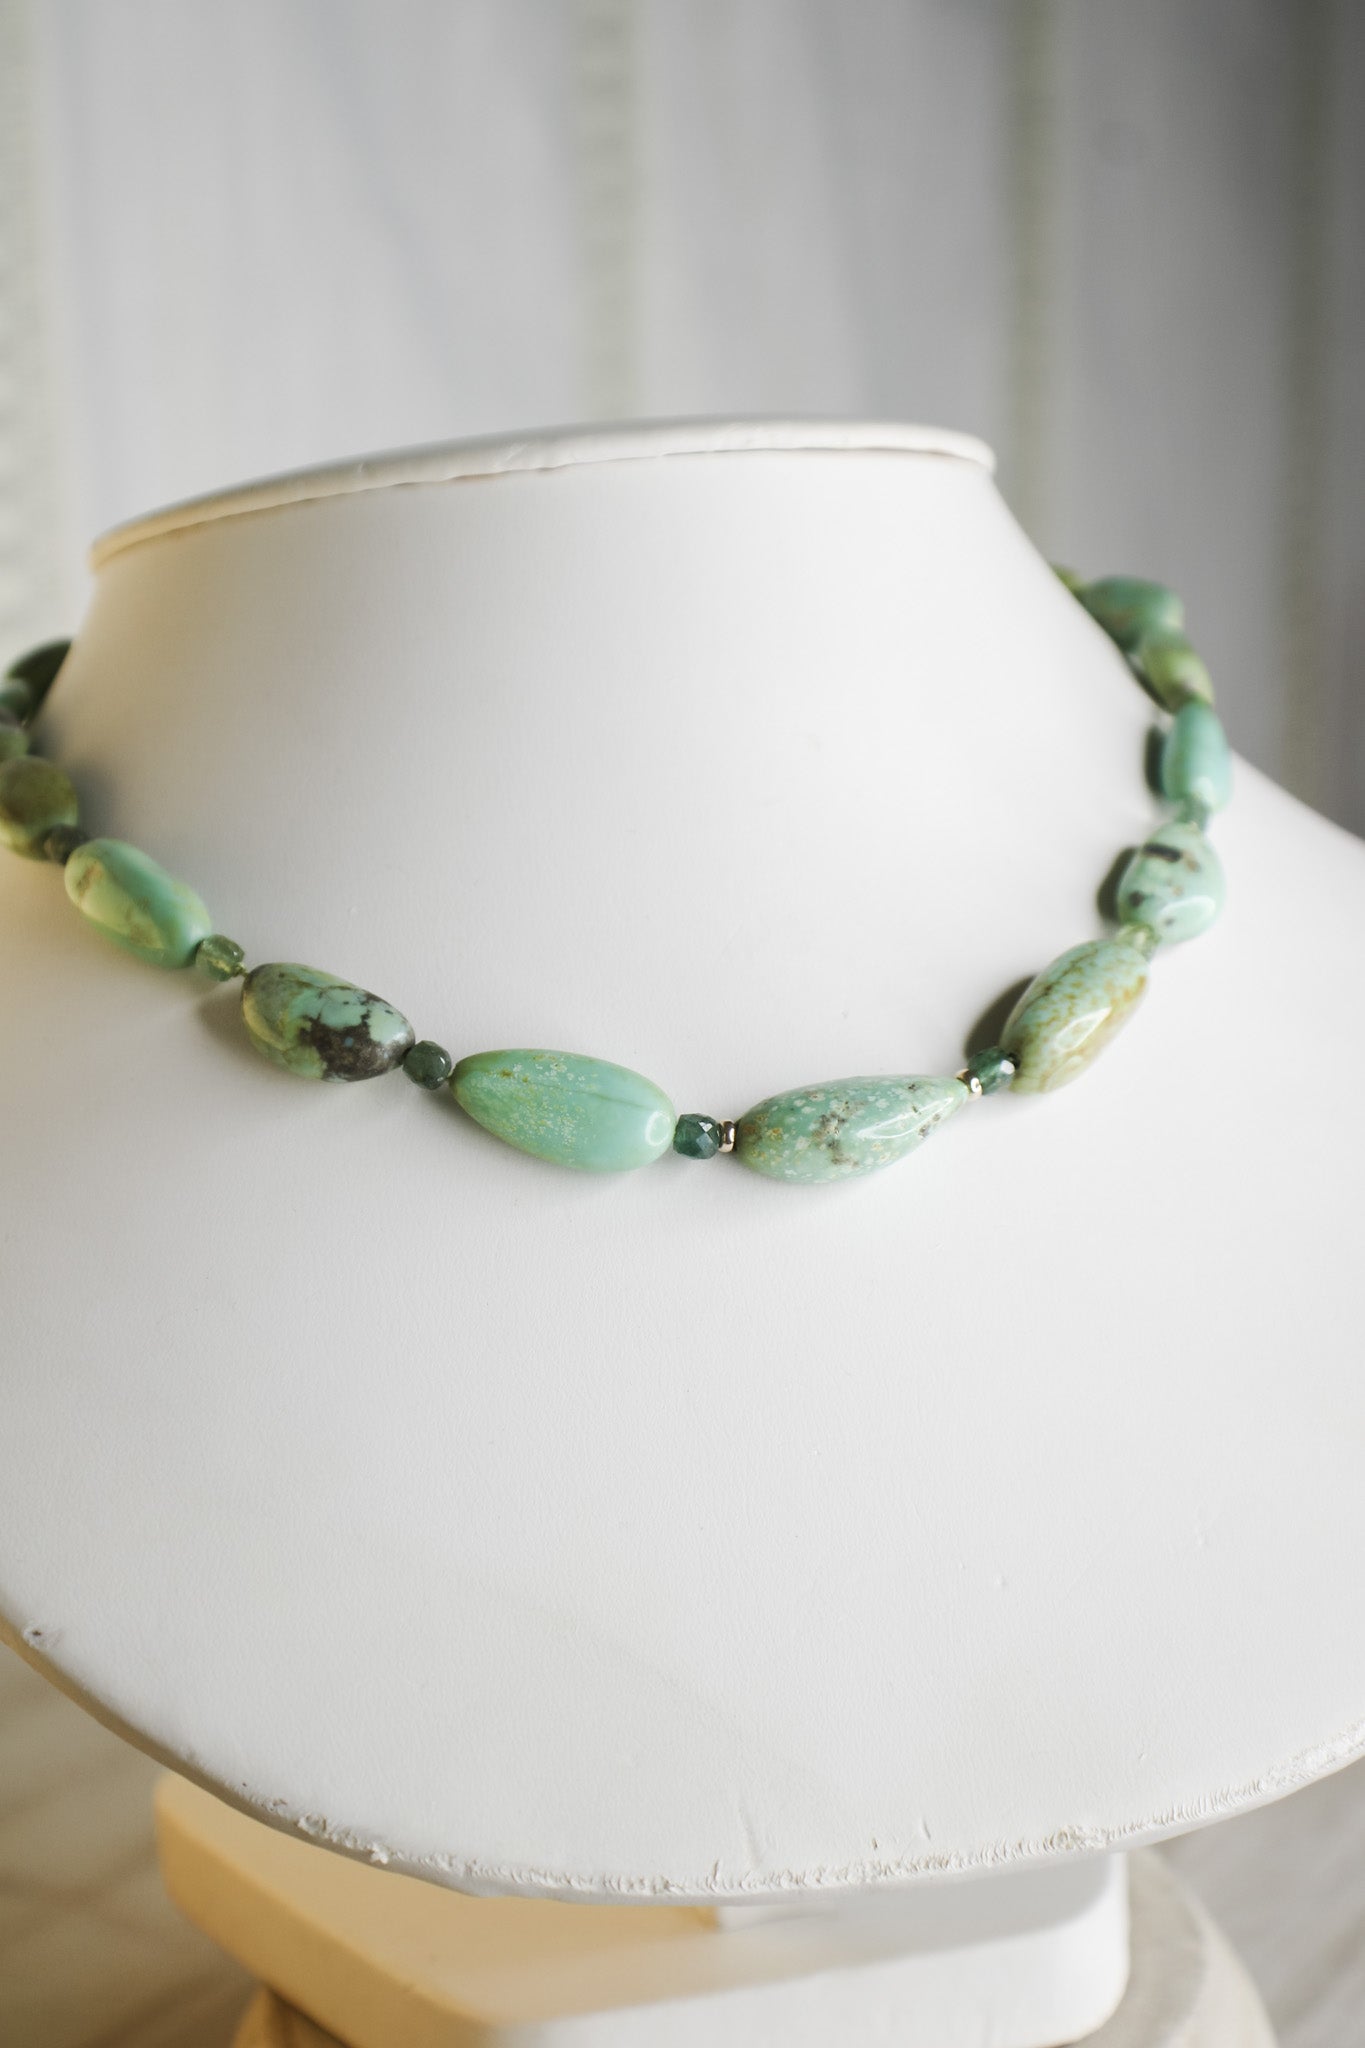 Turquoise and Apatite Necklace (18kt clasp) #7123James & JezebelleNecklace